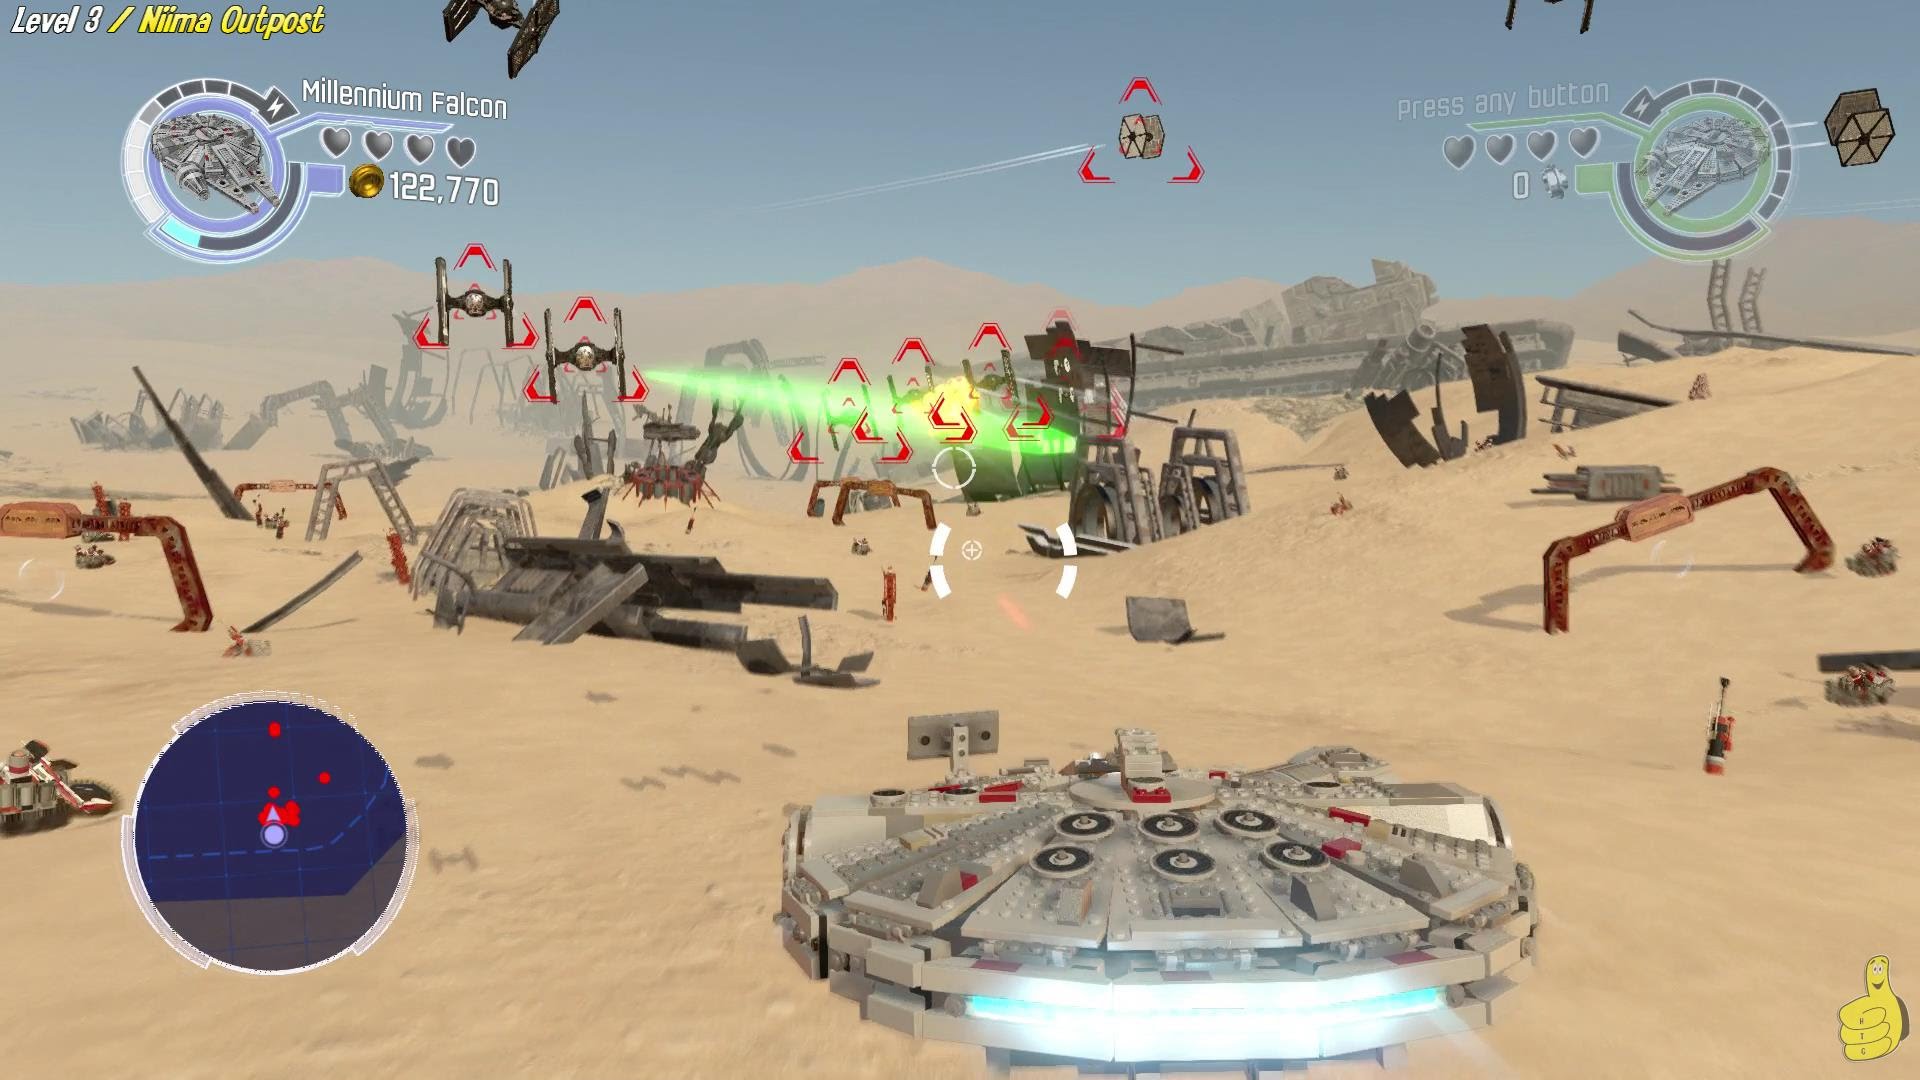 Lego Star Wars The Force Awakens: Lvl 3 / Niima Outpost STORY – HTG